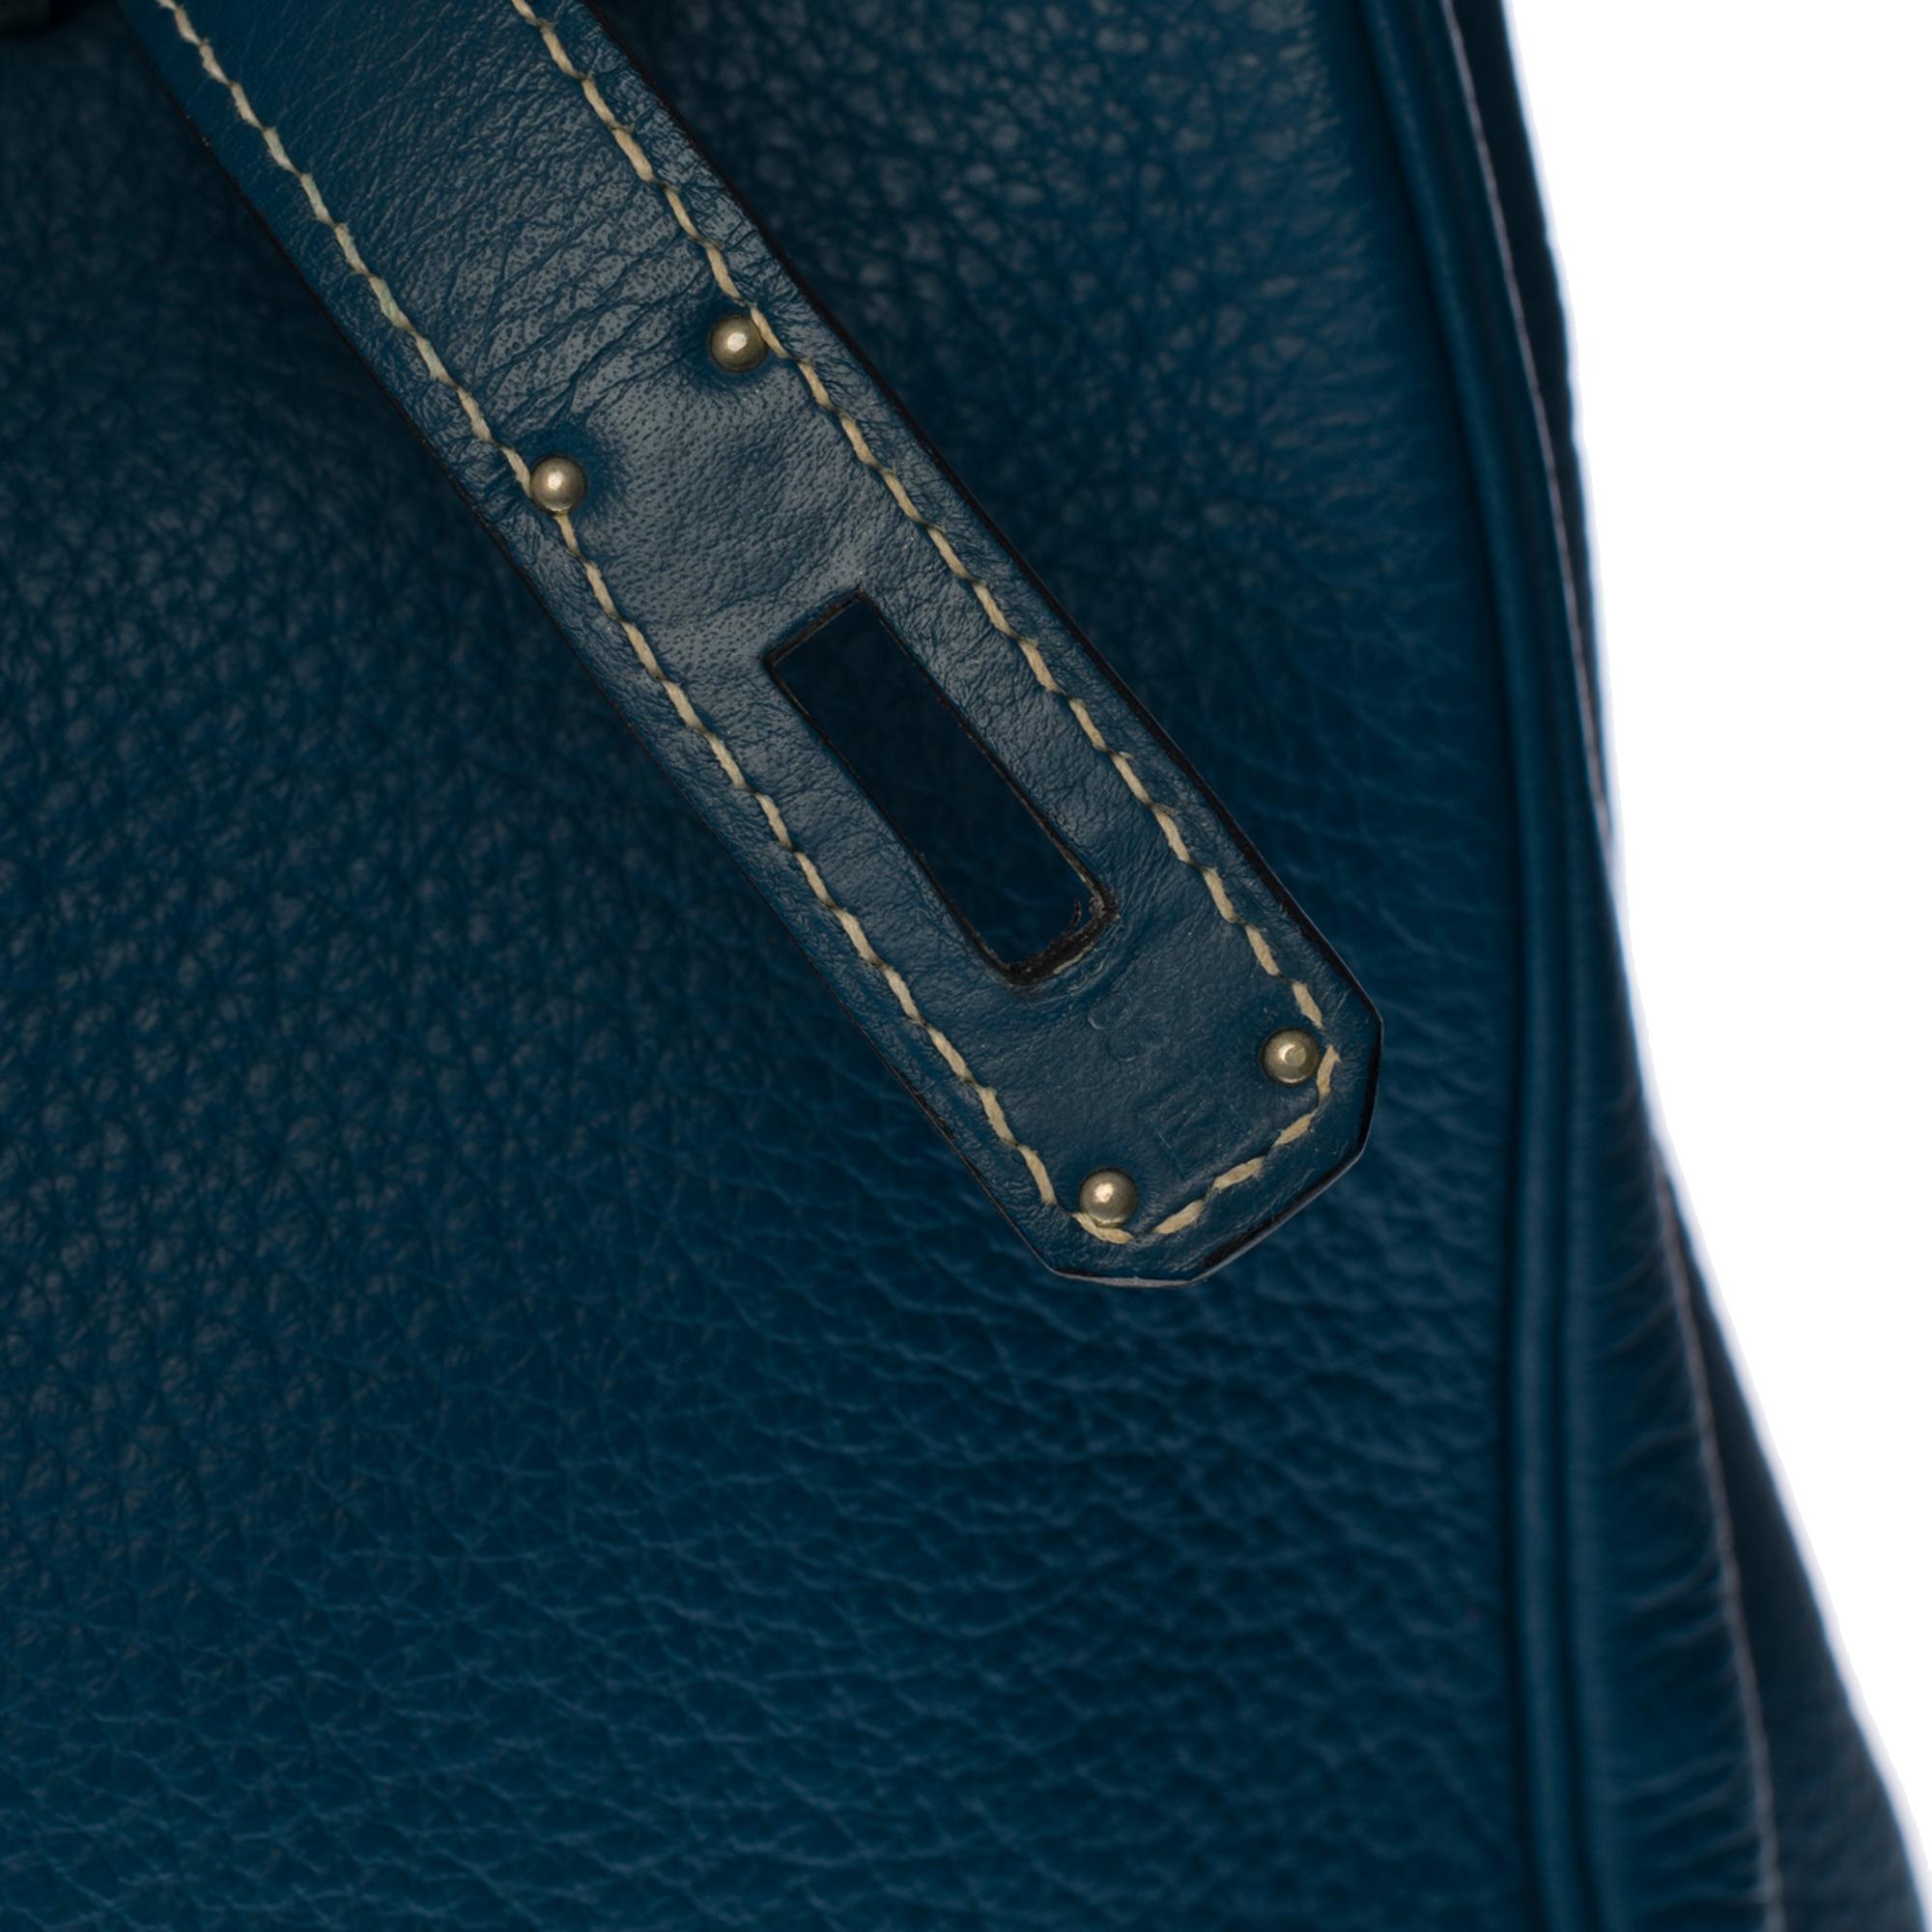 Stunning Hermès Birkin 35 handbag in Blue Thalassa Taurillon leather, SHW 1